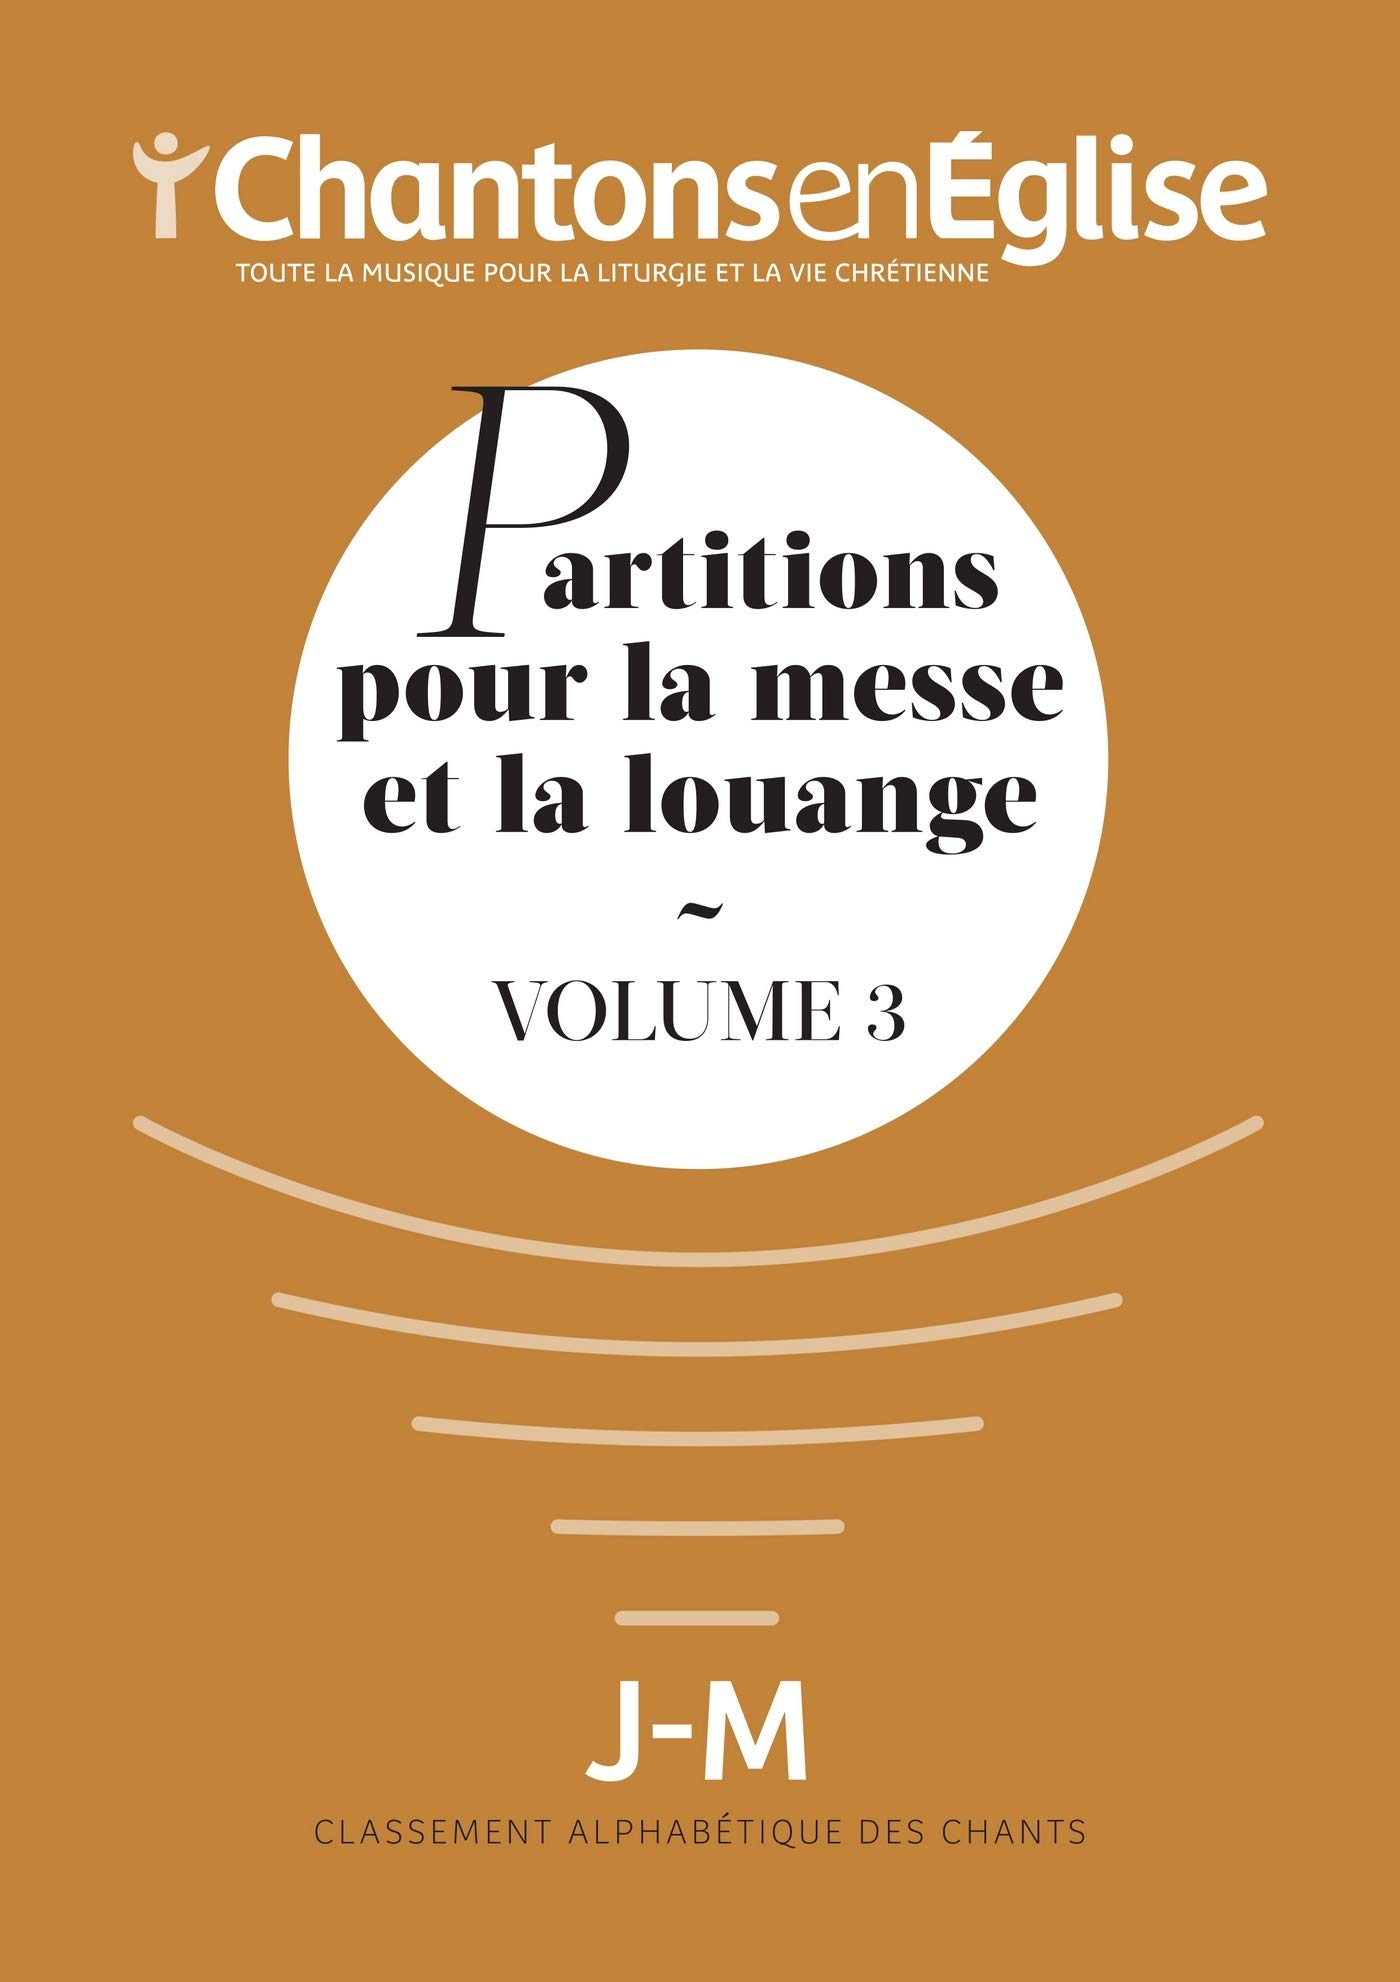 Libri Various - Chantons En Eglise : Partitions Pour La Messe Et La Louange Vol. 3 NUOVO SIGILLATO, EDIZIONE DEL 29/06/2017 SUBITO DISPONIBILE